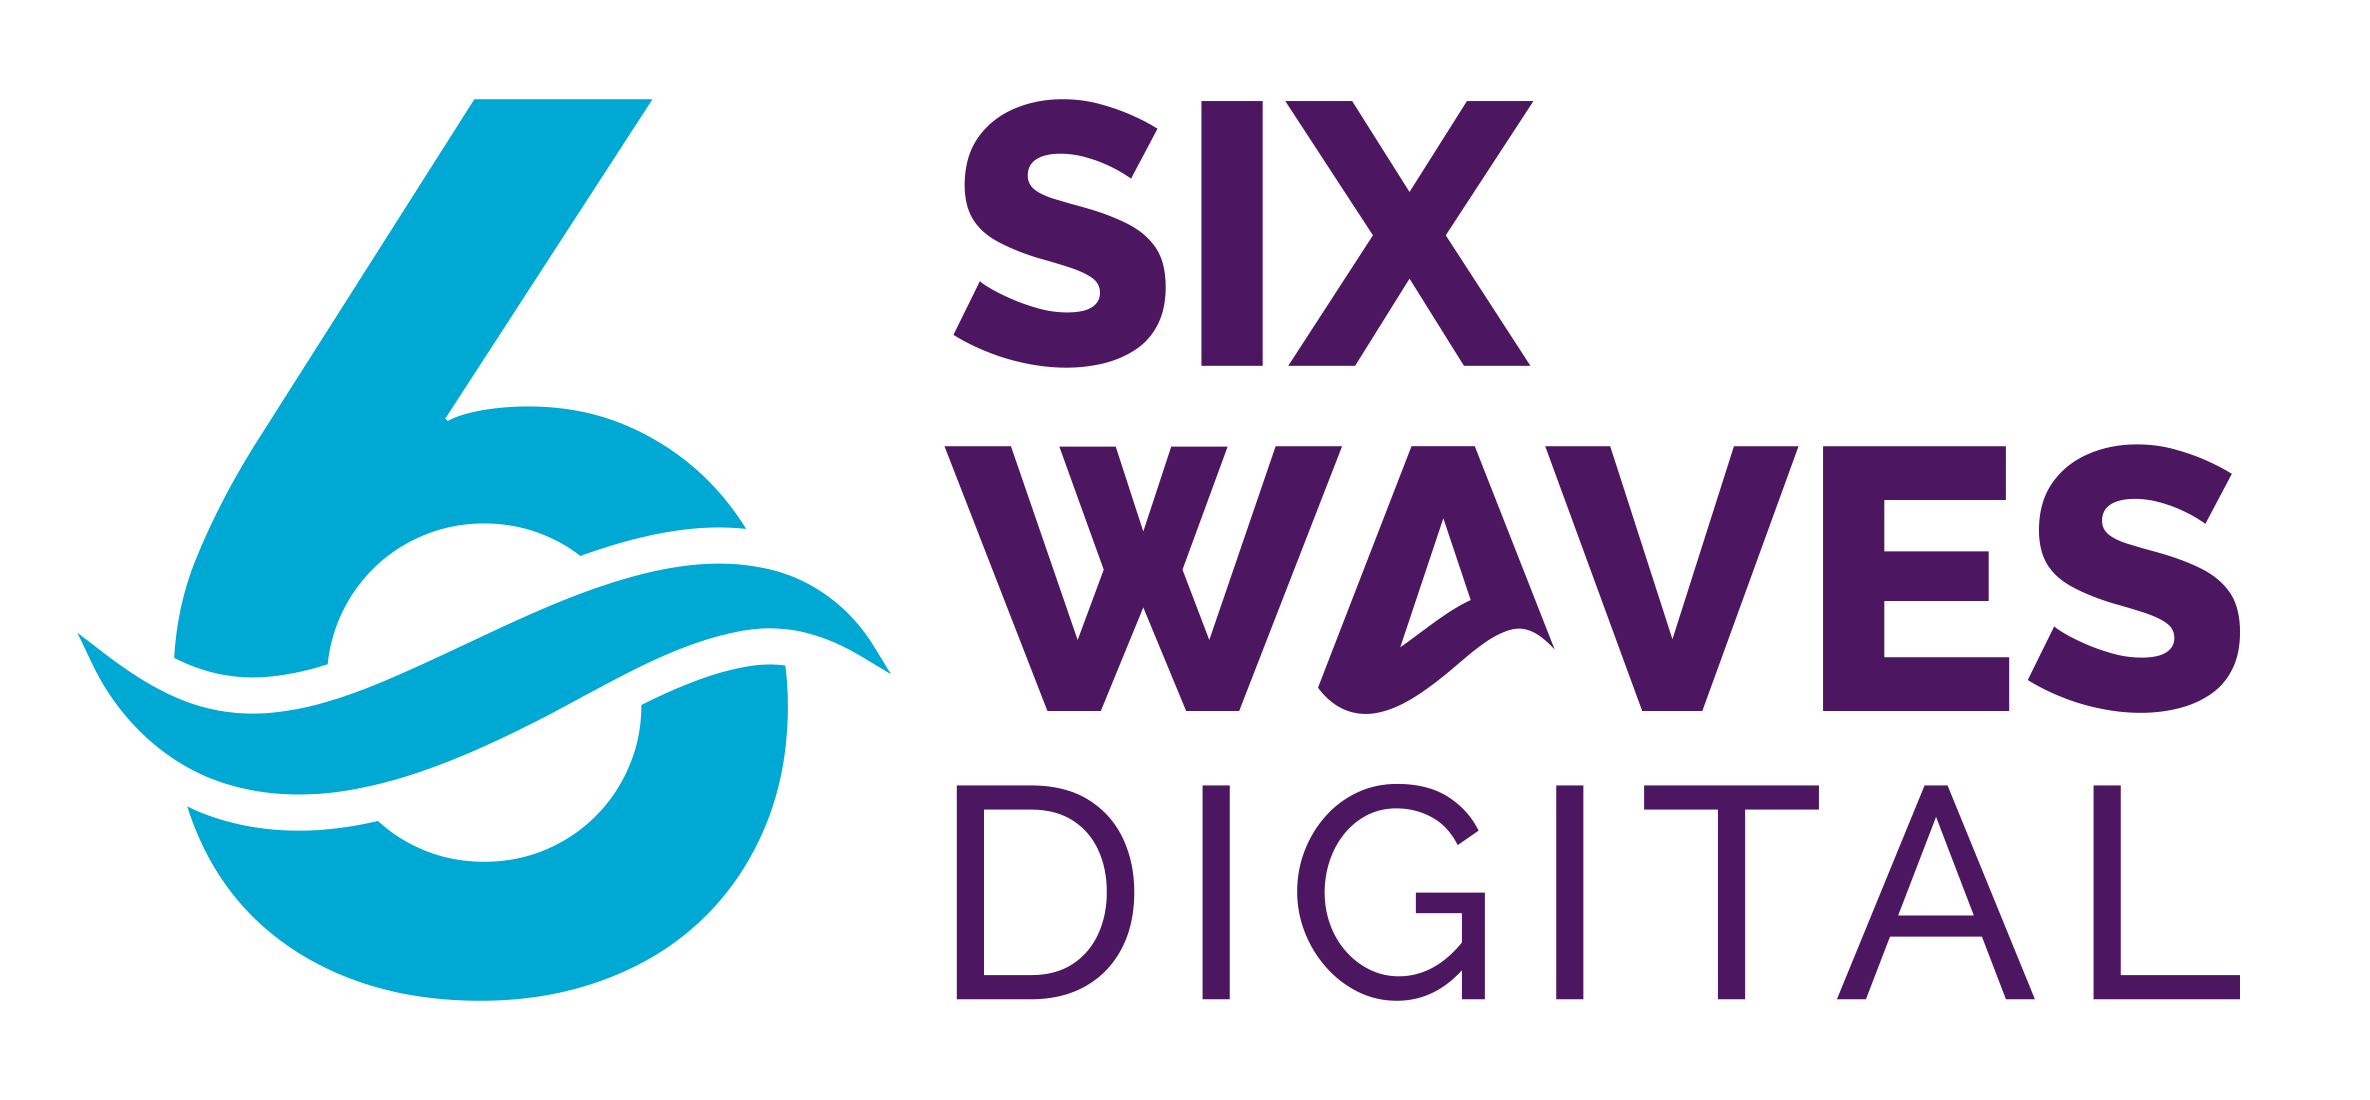 SIX WAVES DIGITAL Full colour logo